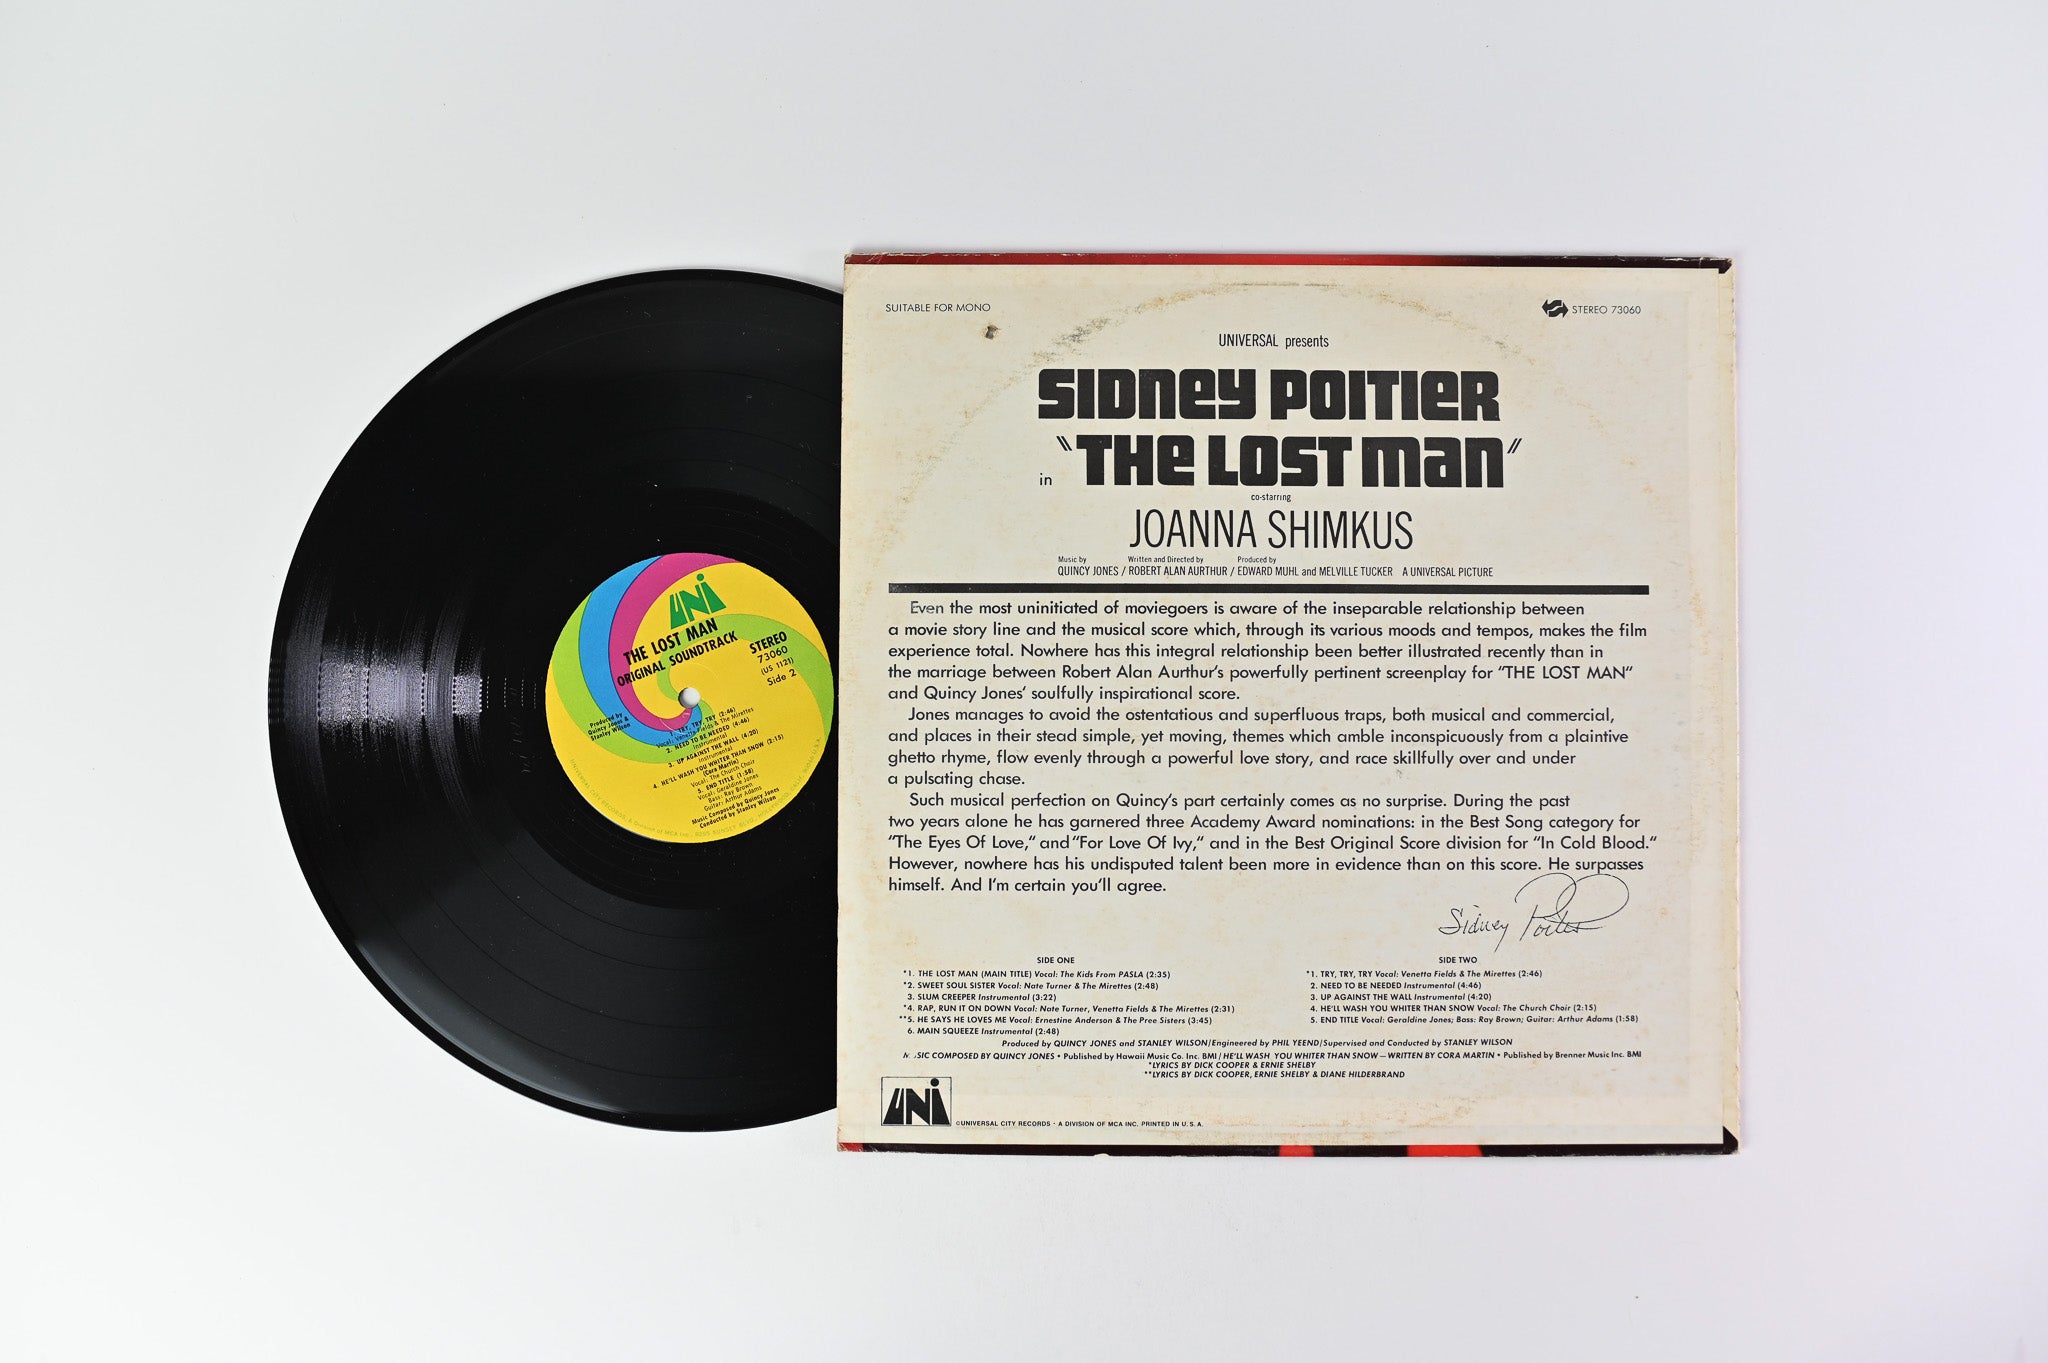 Quincy Jones - The Lost Man (The Original Soundtrack Album) on UNI Records